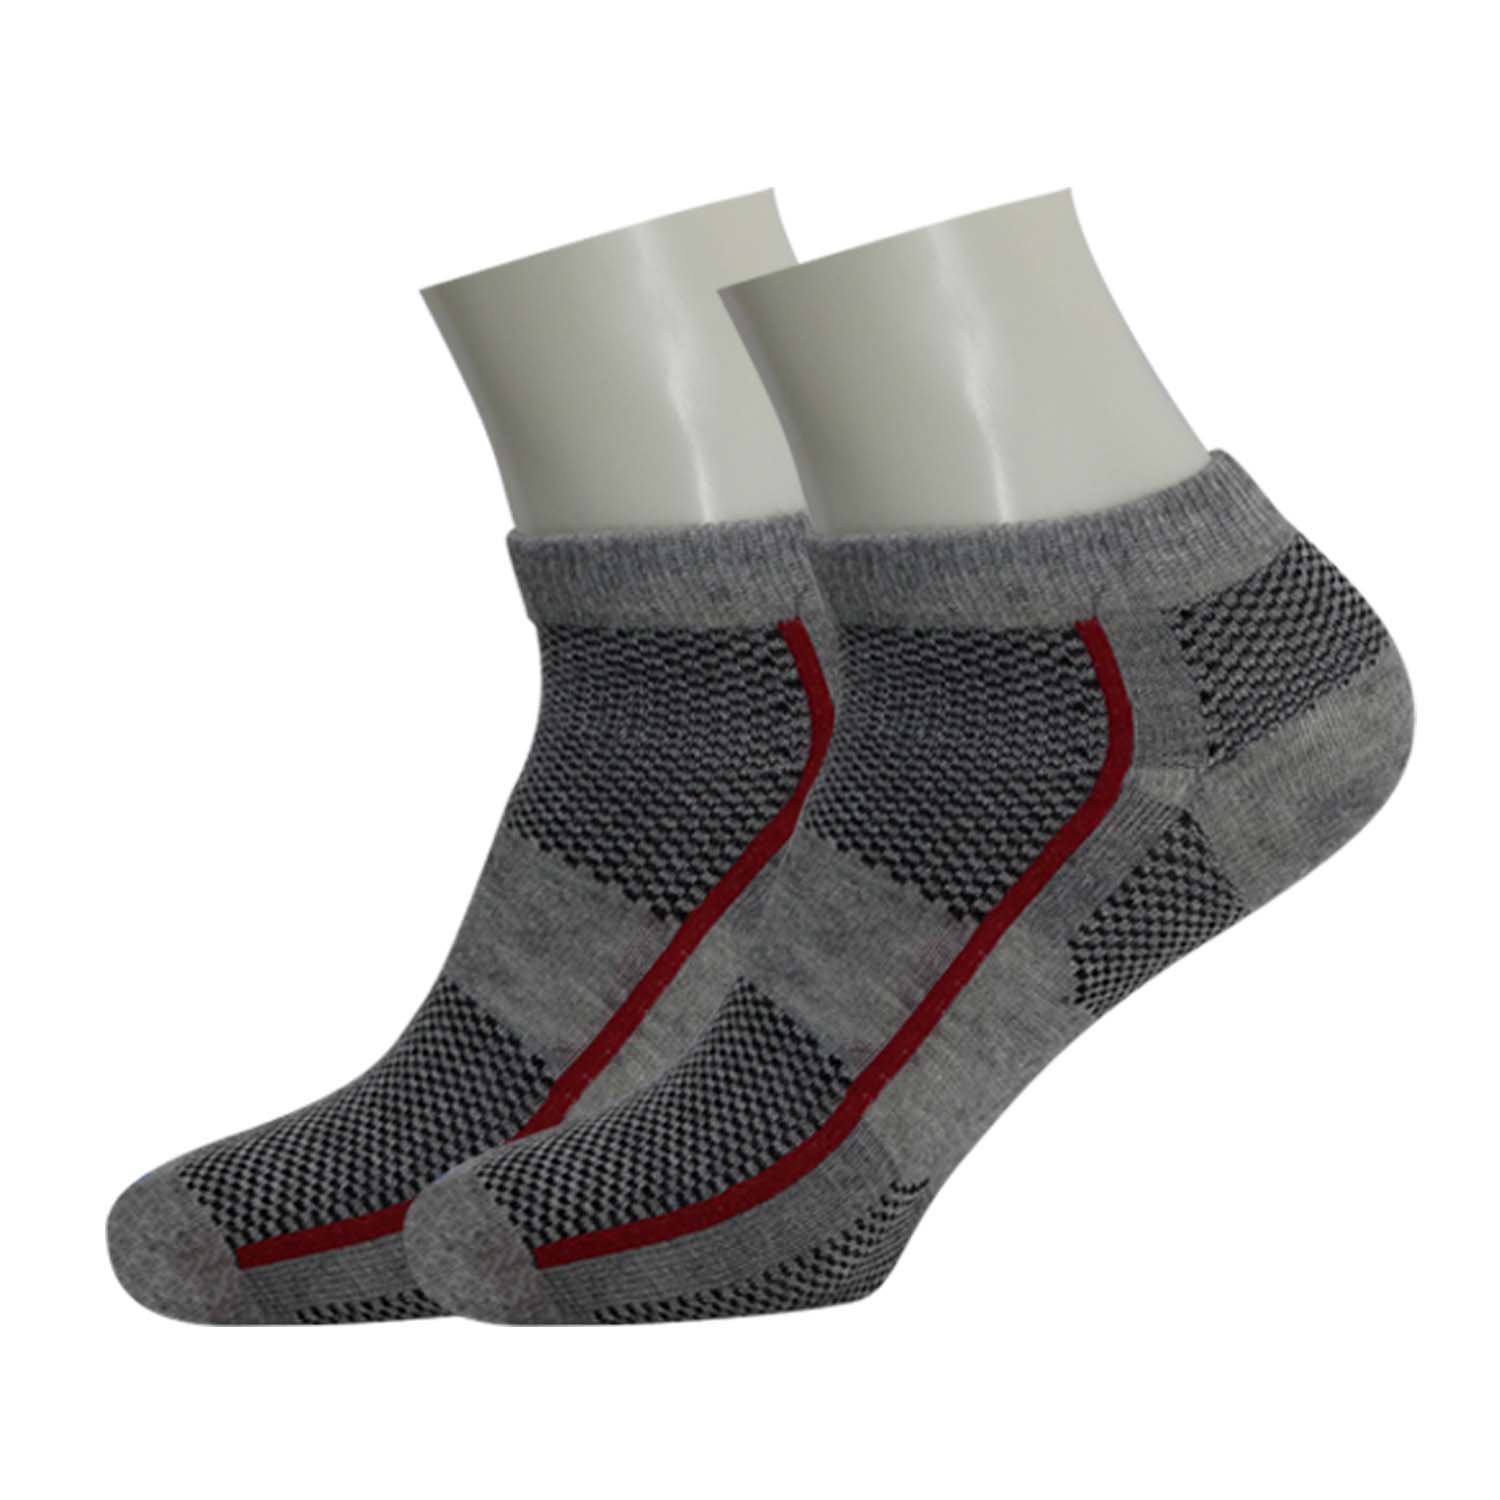 Men's Low Cut Wholesale Sock, Size 9-11 in Assorted Designs - Bulk Case of 144 Pairs